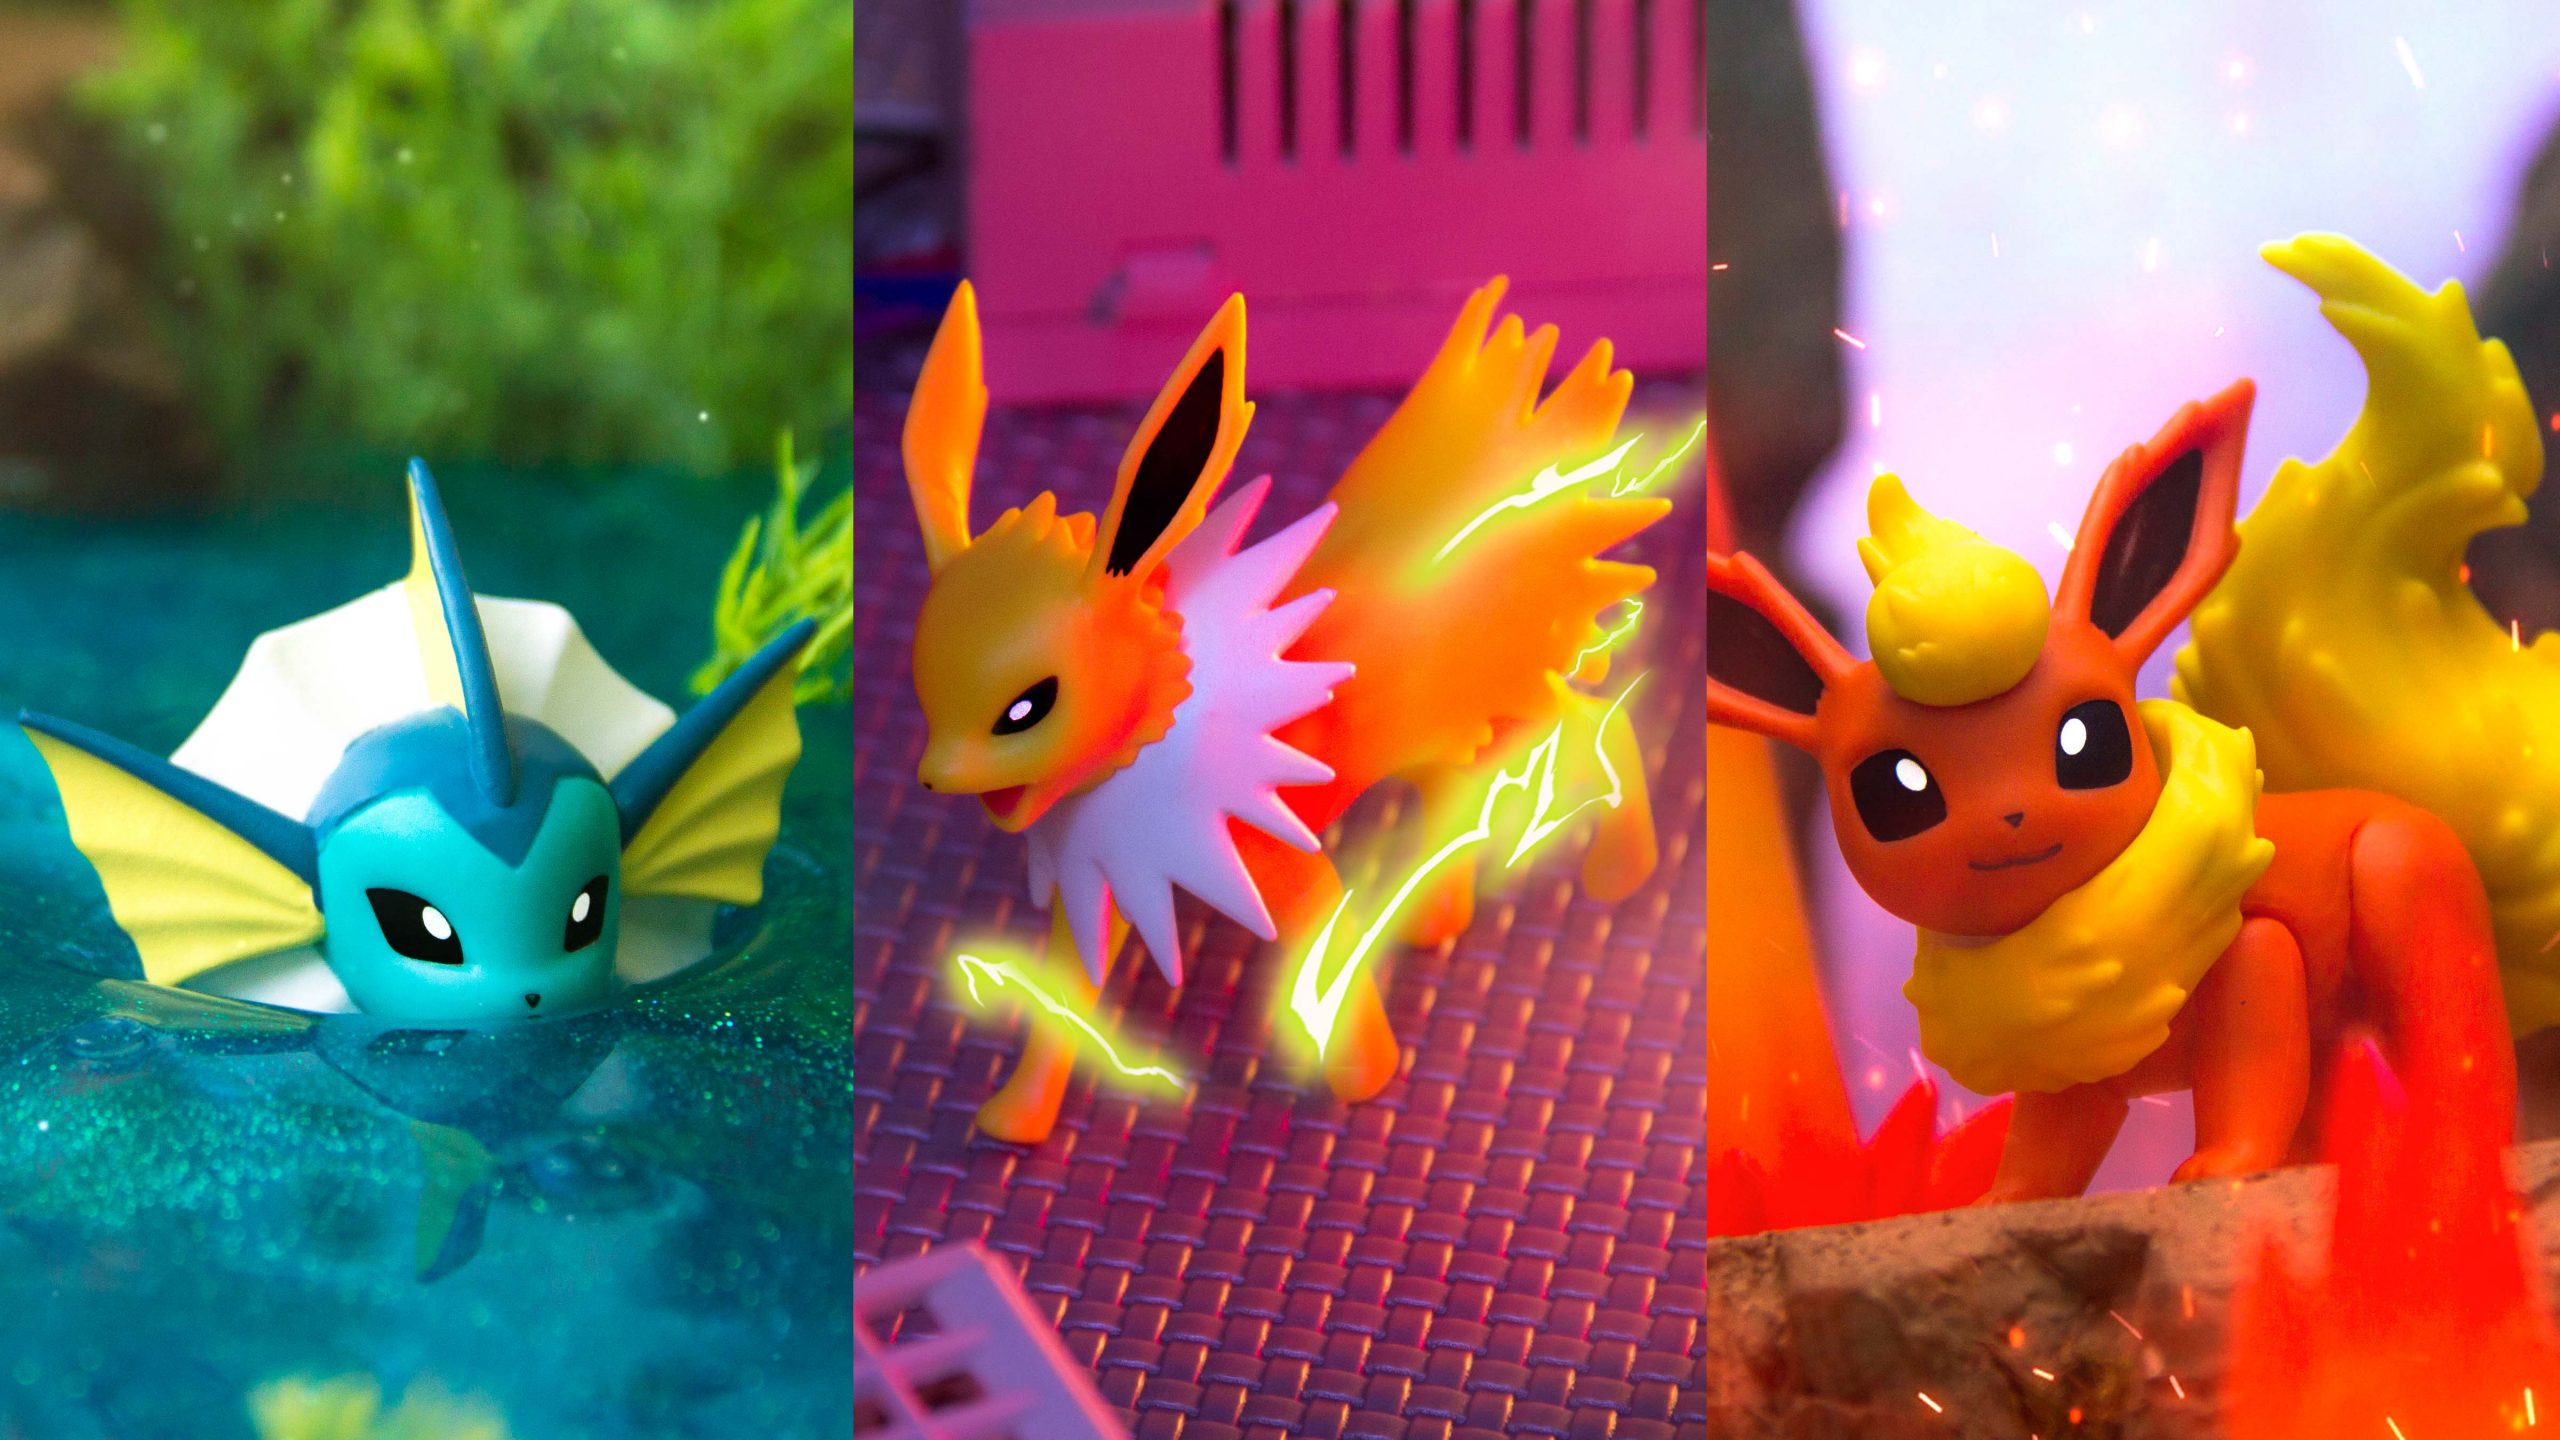 Pokémon Conjunto de Evoluções Eevee - Sunny